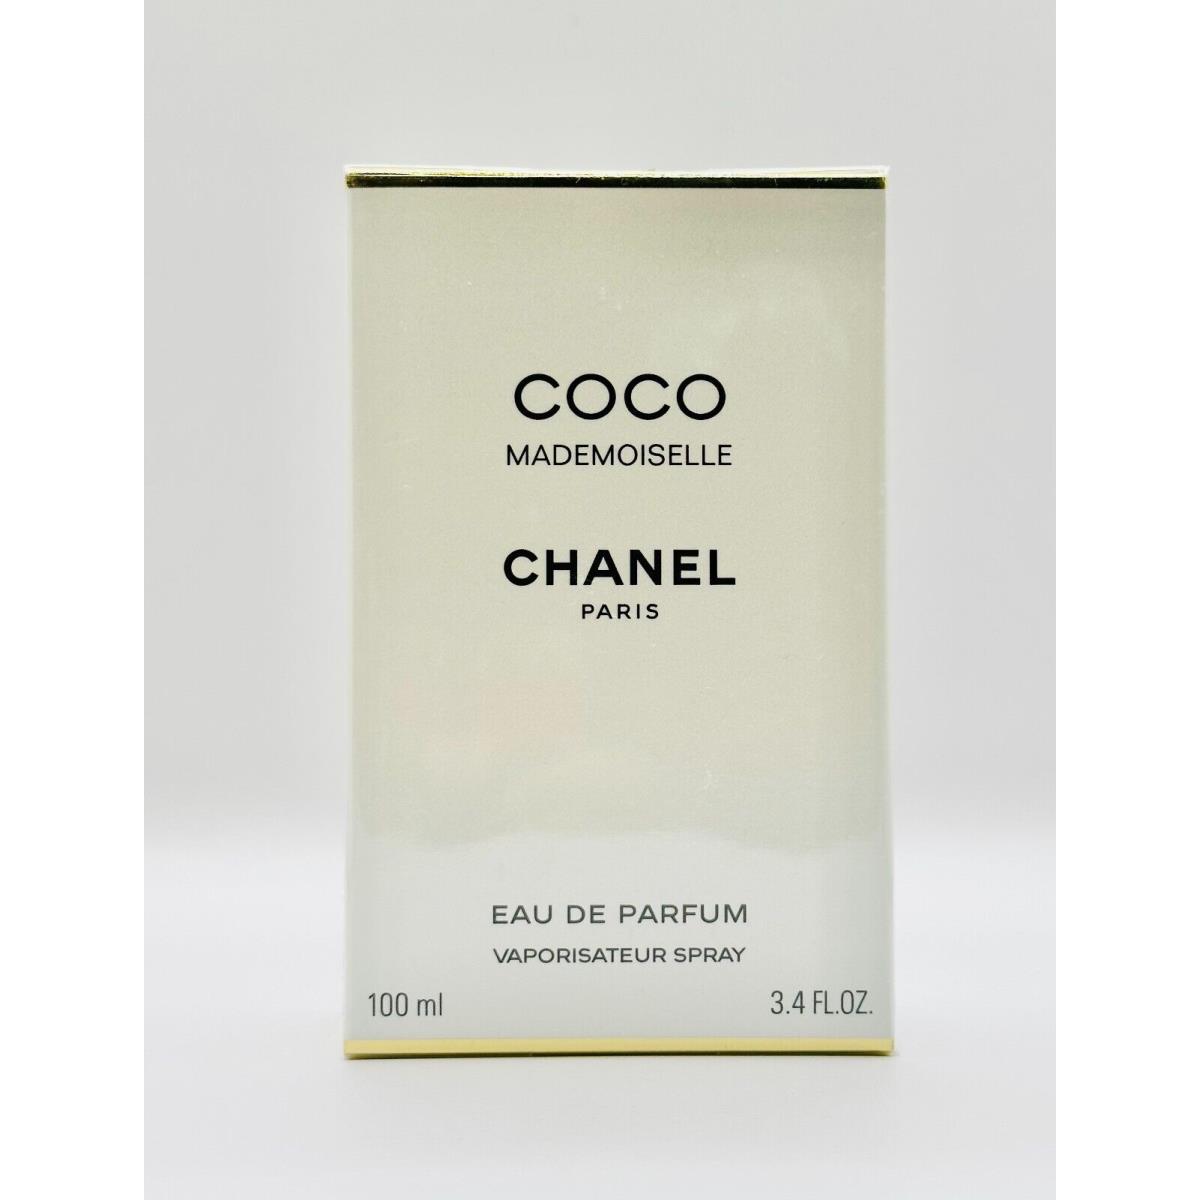 Coco Chanel Mademoiselle 3.4 Fl. Oz. 100 ml Eau De Parfum